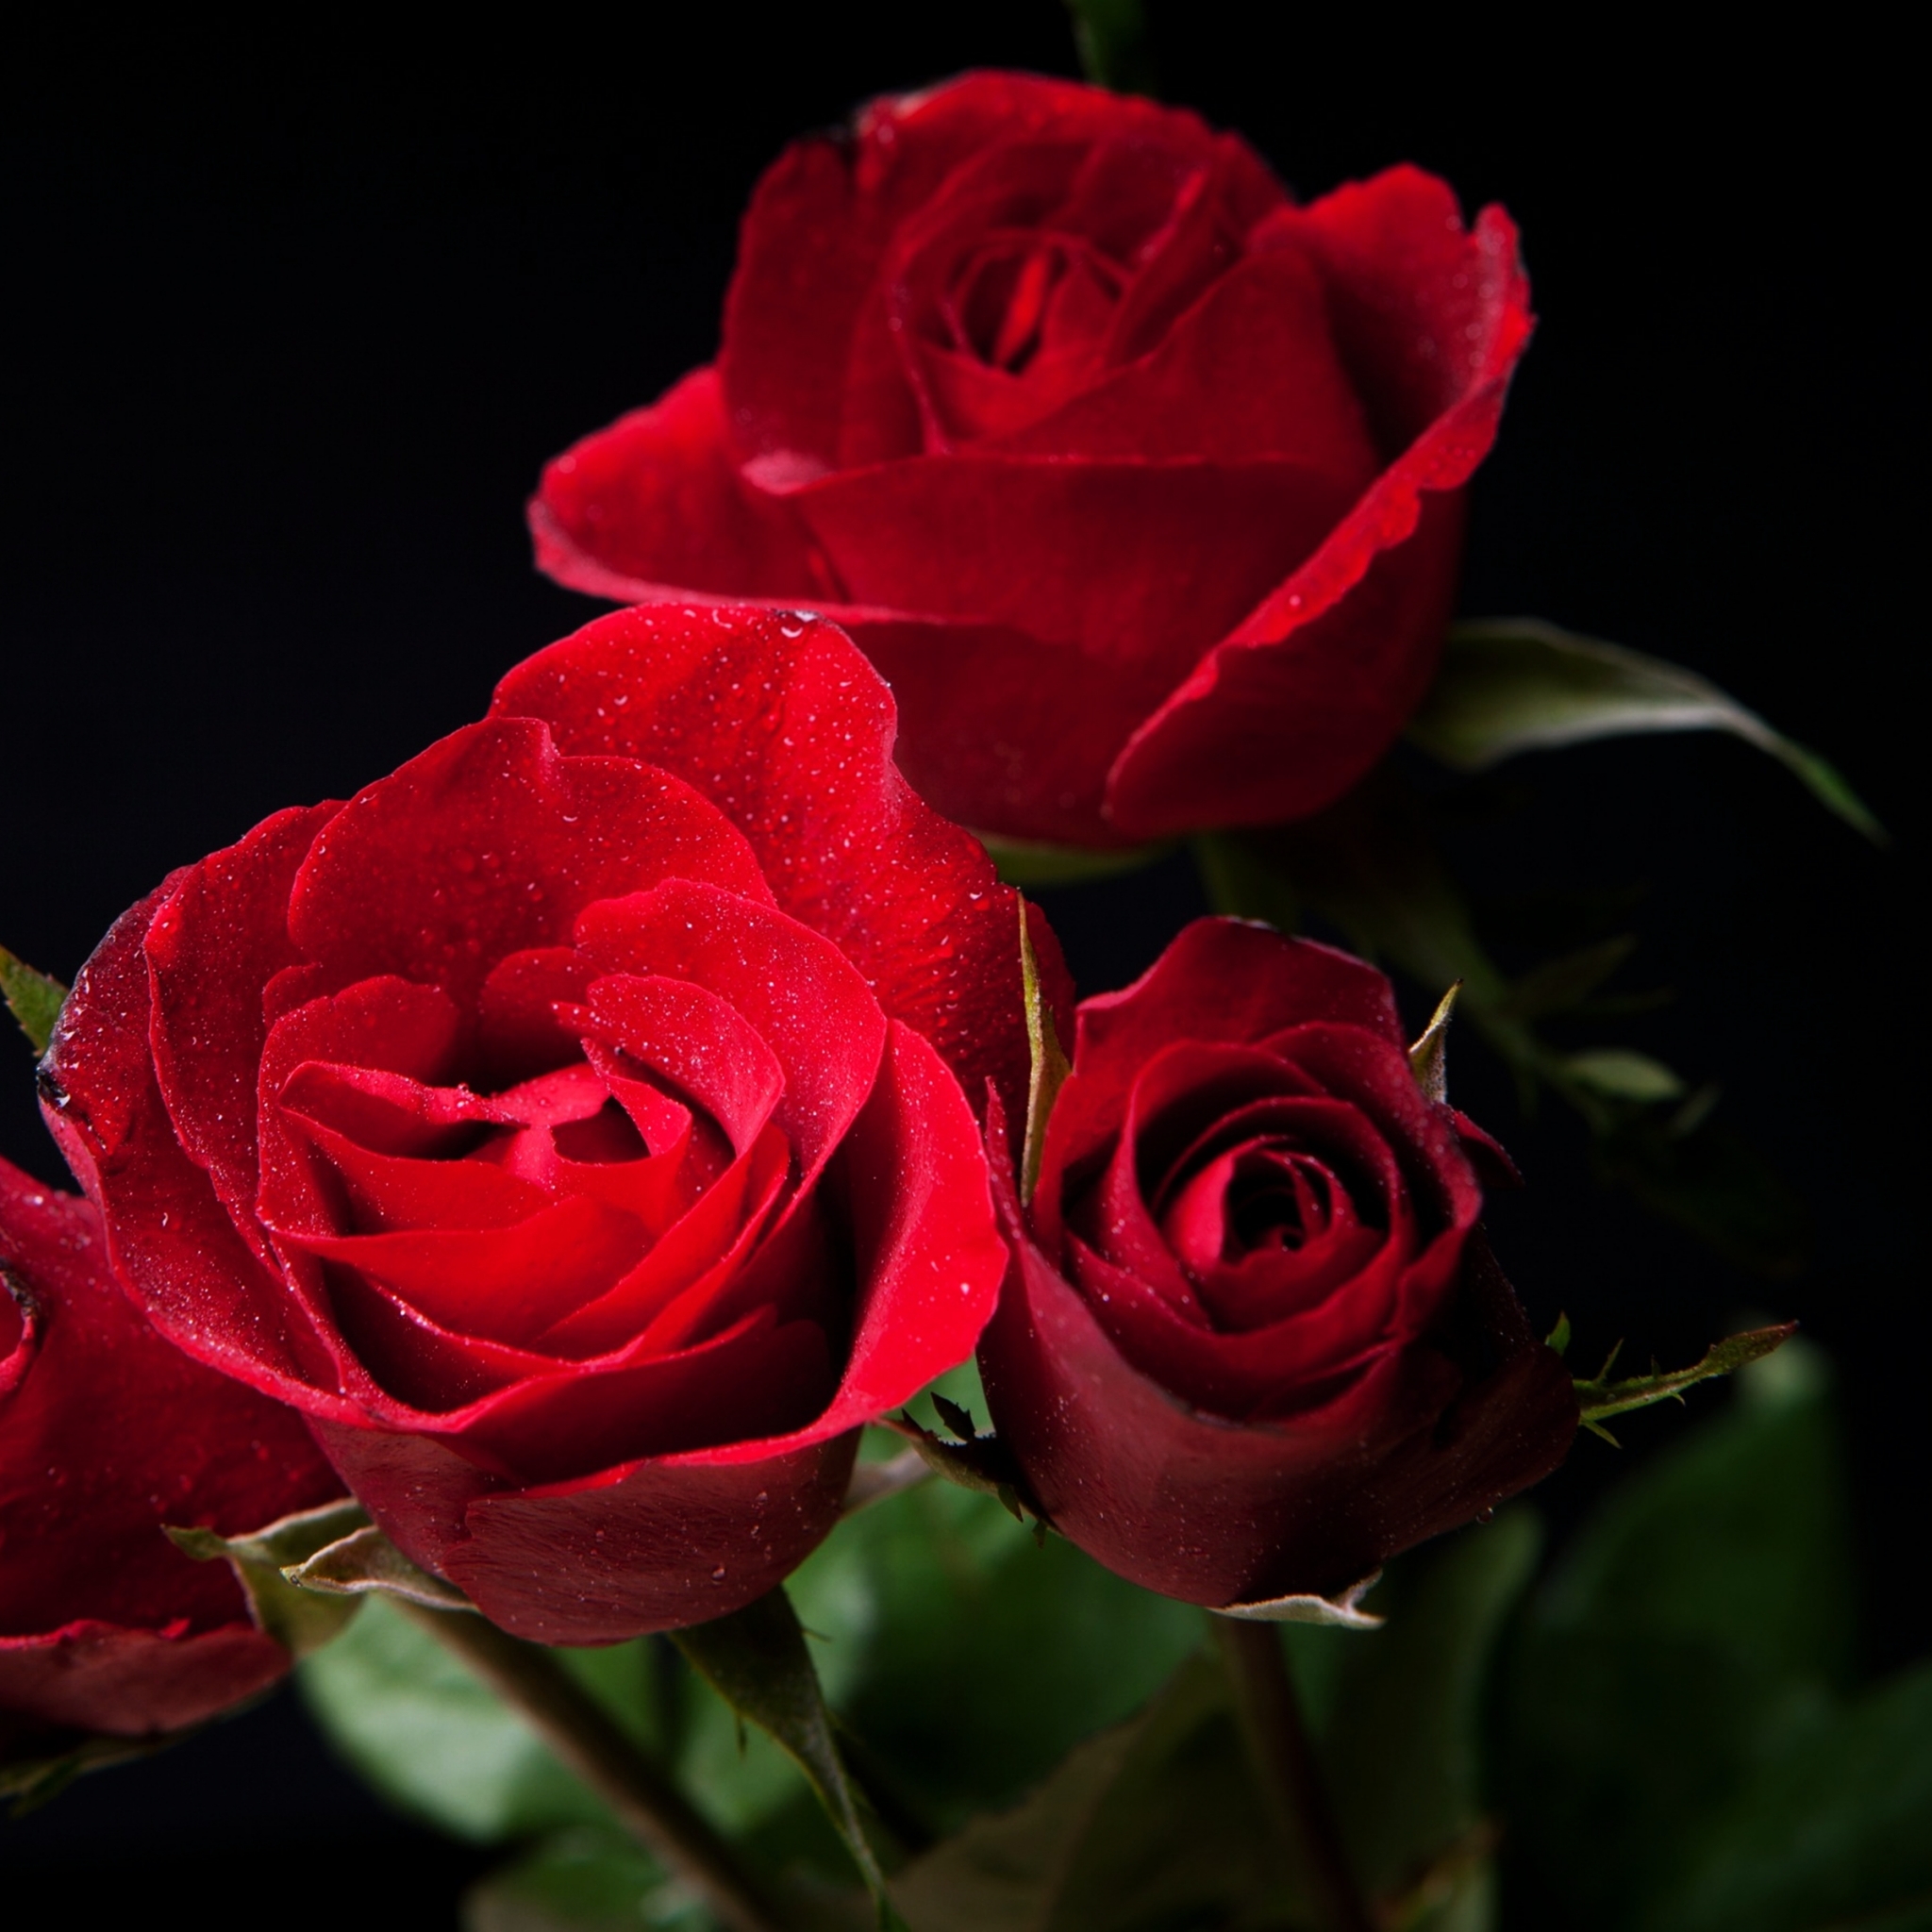 Descarga gratis la imagen Naturaleza, Flores, Rosa, Flor, Rosa Roja, Flor Roja, Tierra/naturaleza en el escritorio de tu PC